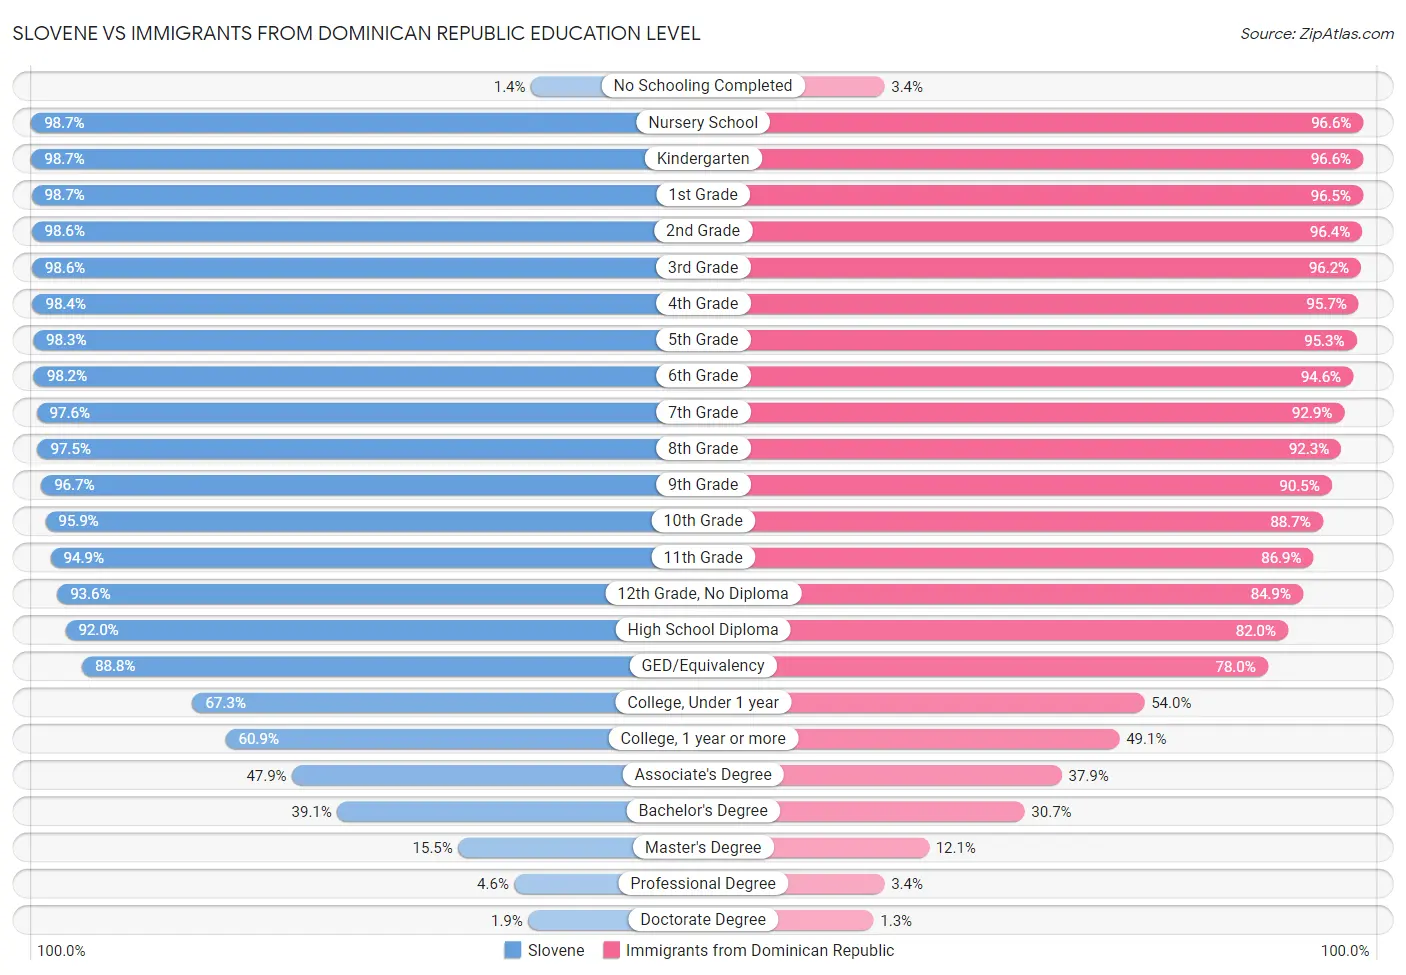 Slovene vs Immigrants from Dominican Republic Education Level